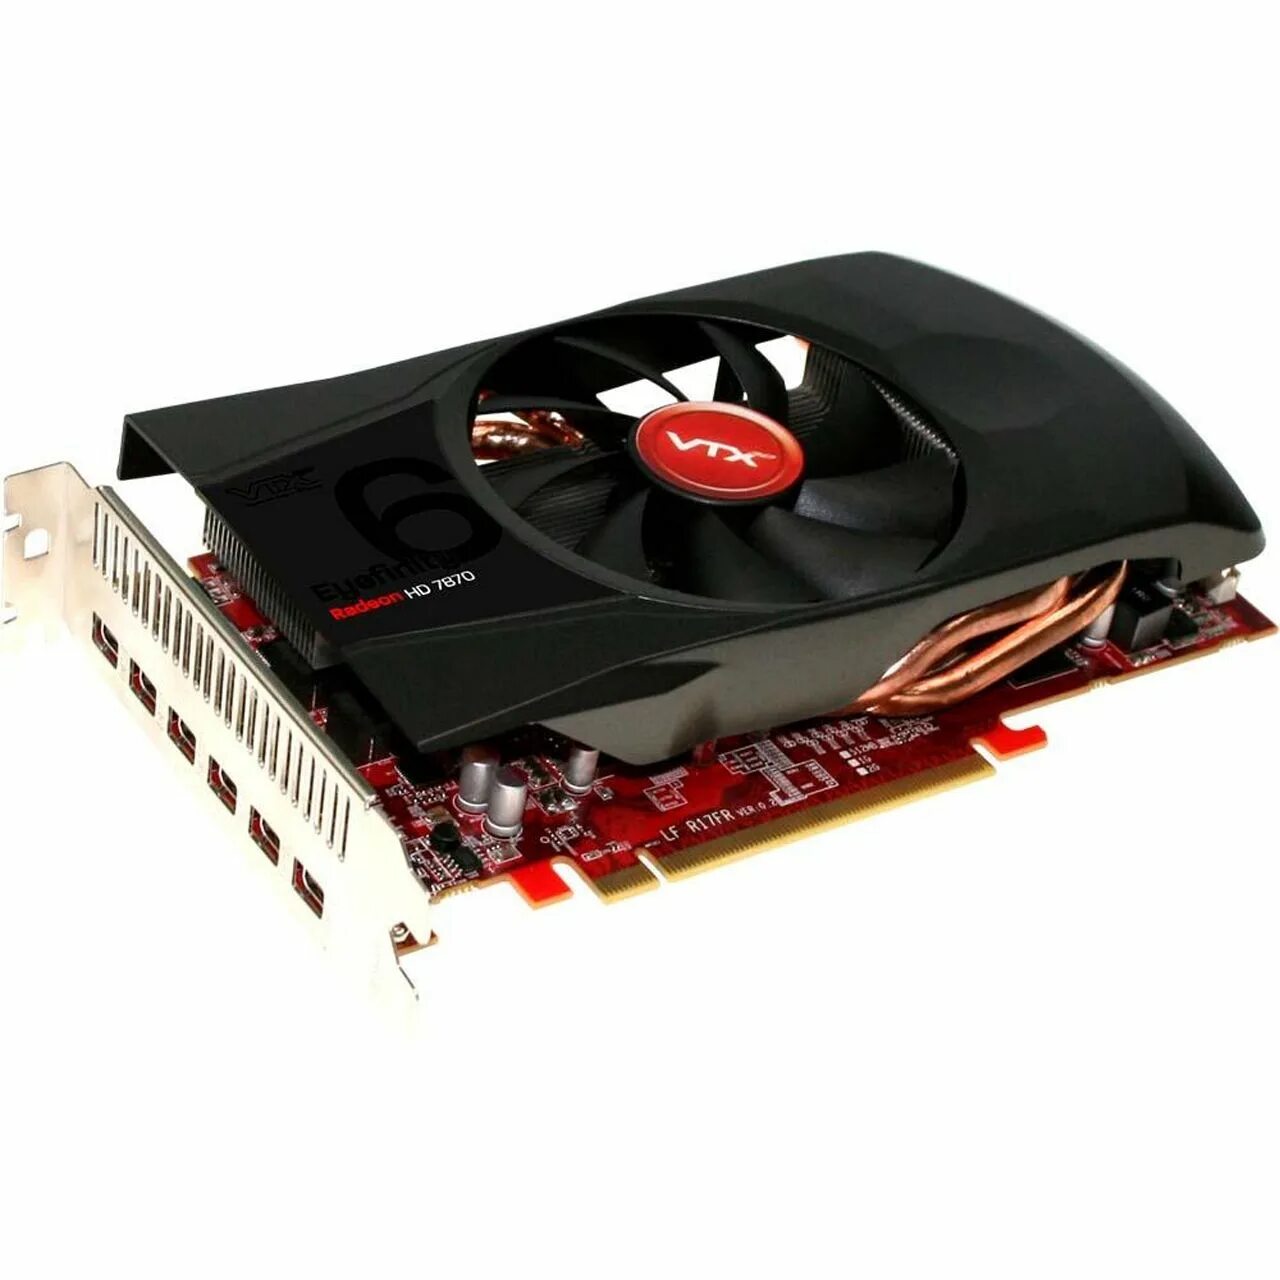 AMD Radeon 7600 g. Amd r3 series